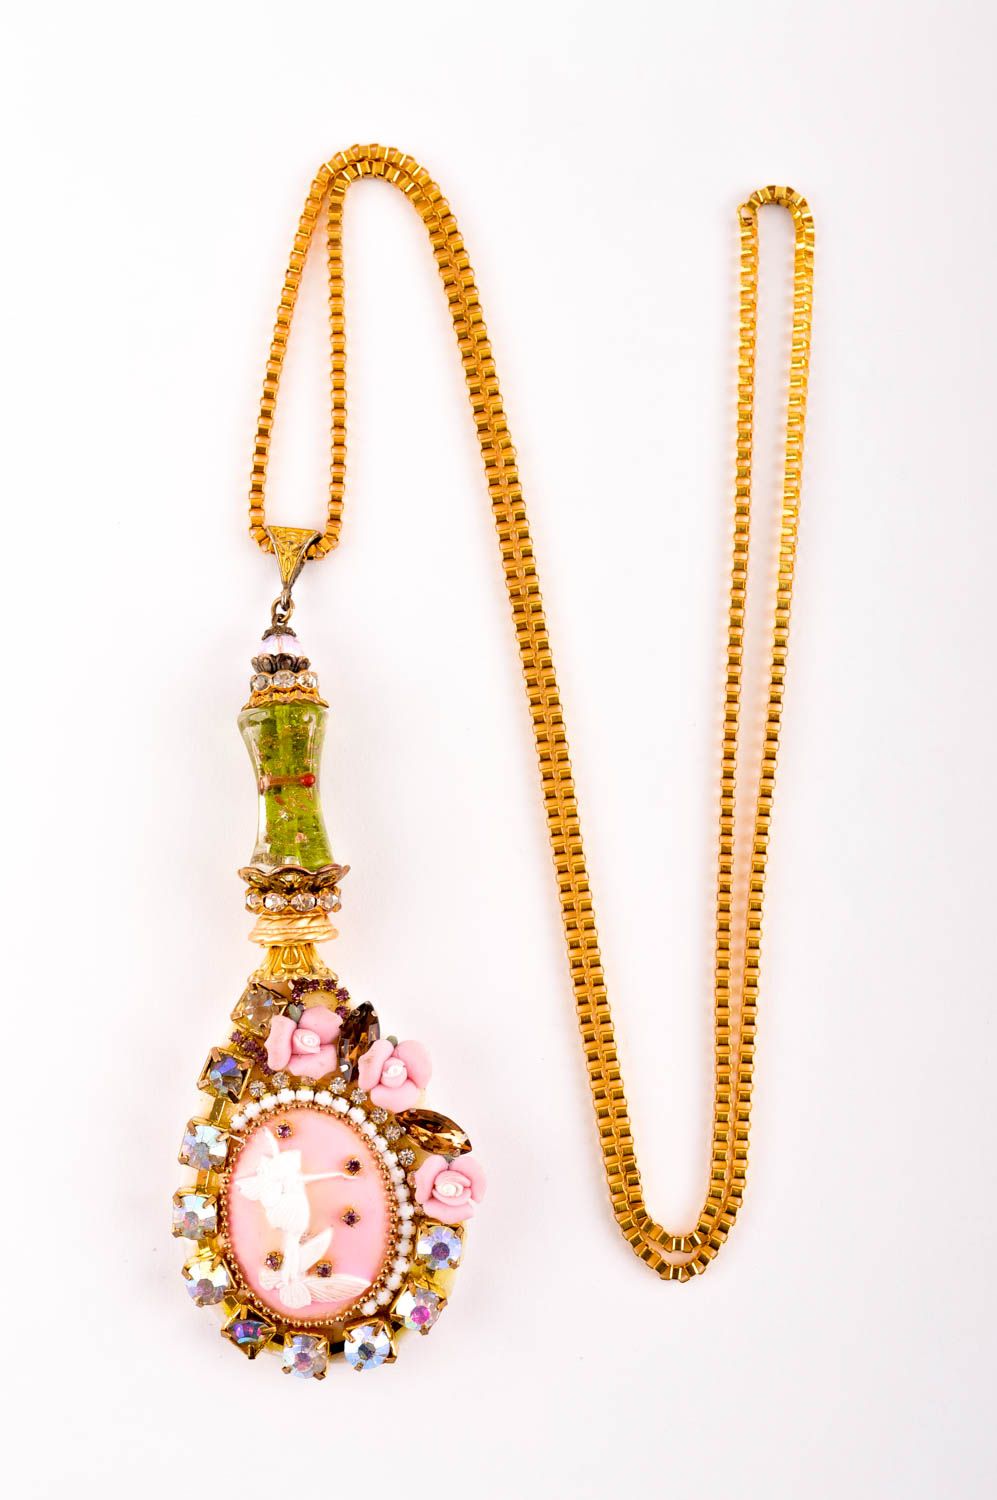 Handmade pendant unusual pendant for women designer accessory with stones photo 2